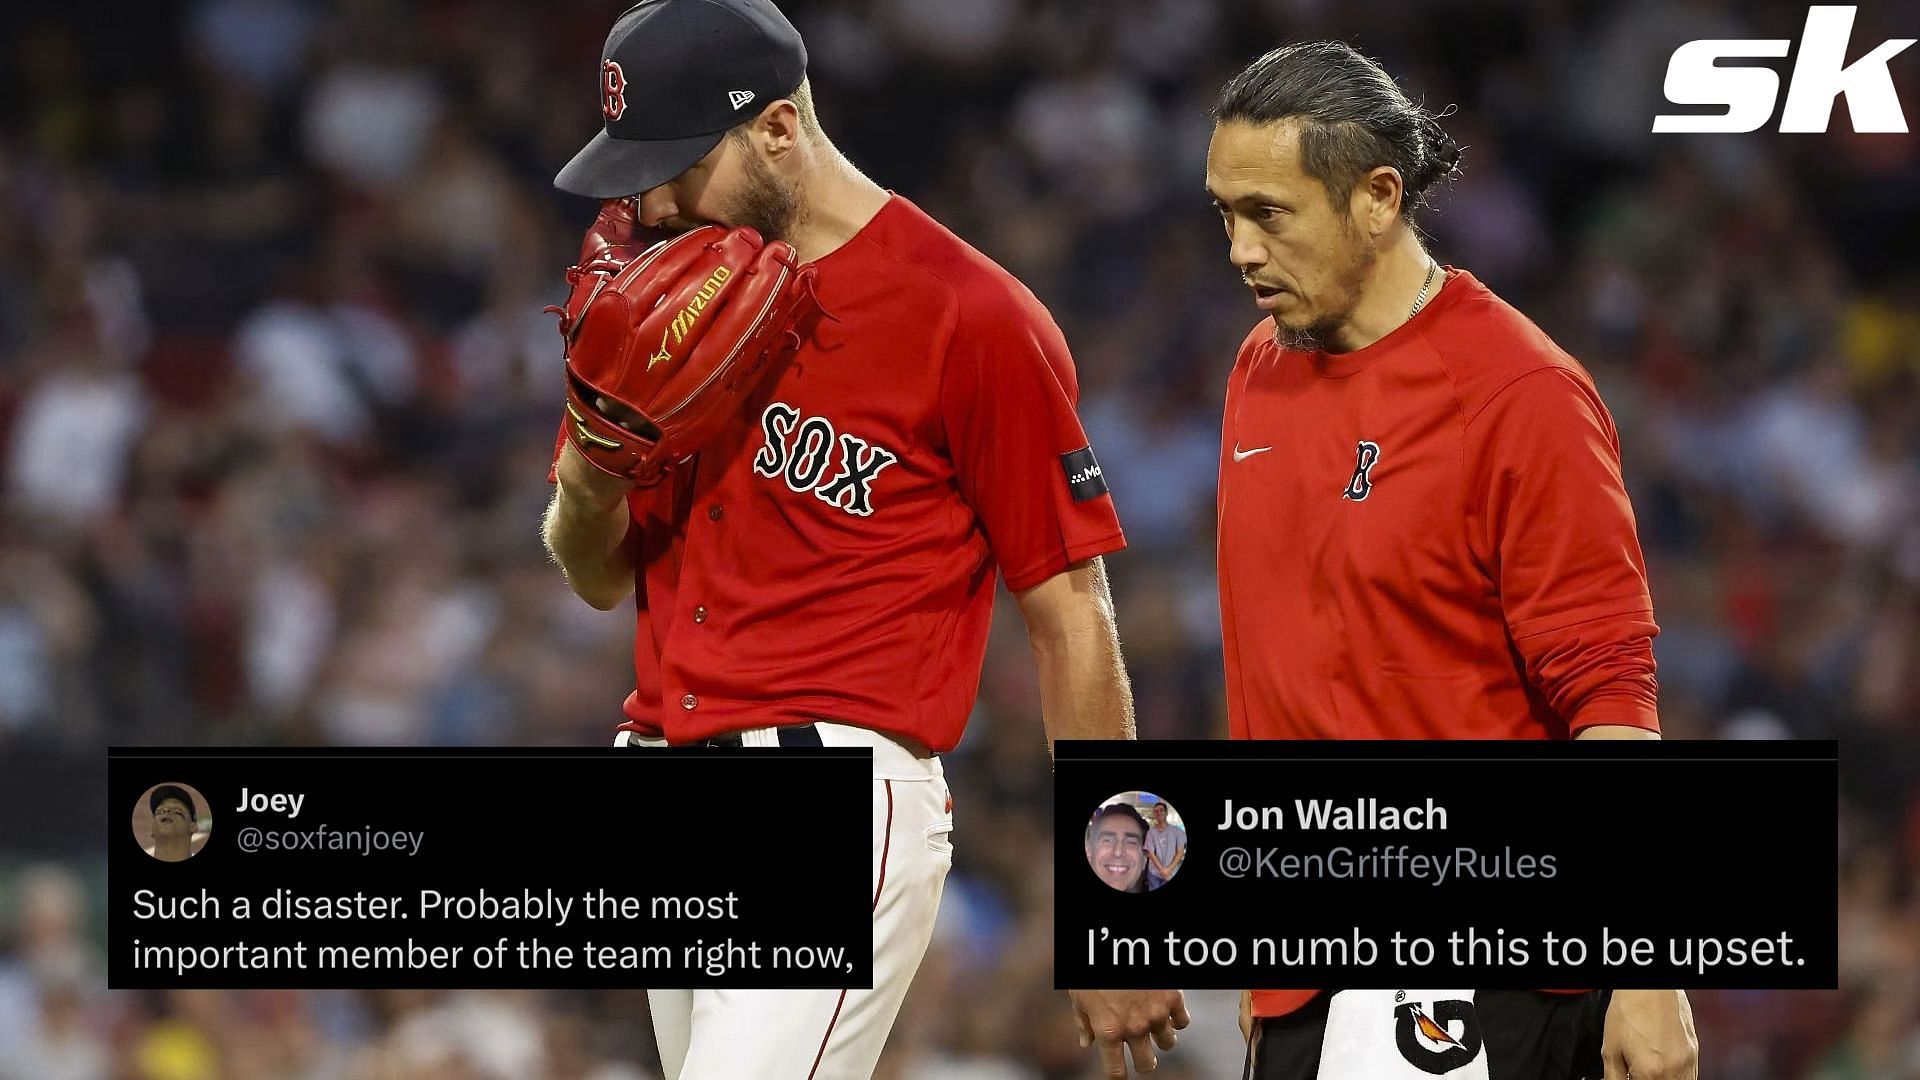 Boston Red Sox Pitcher Chris Sale